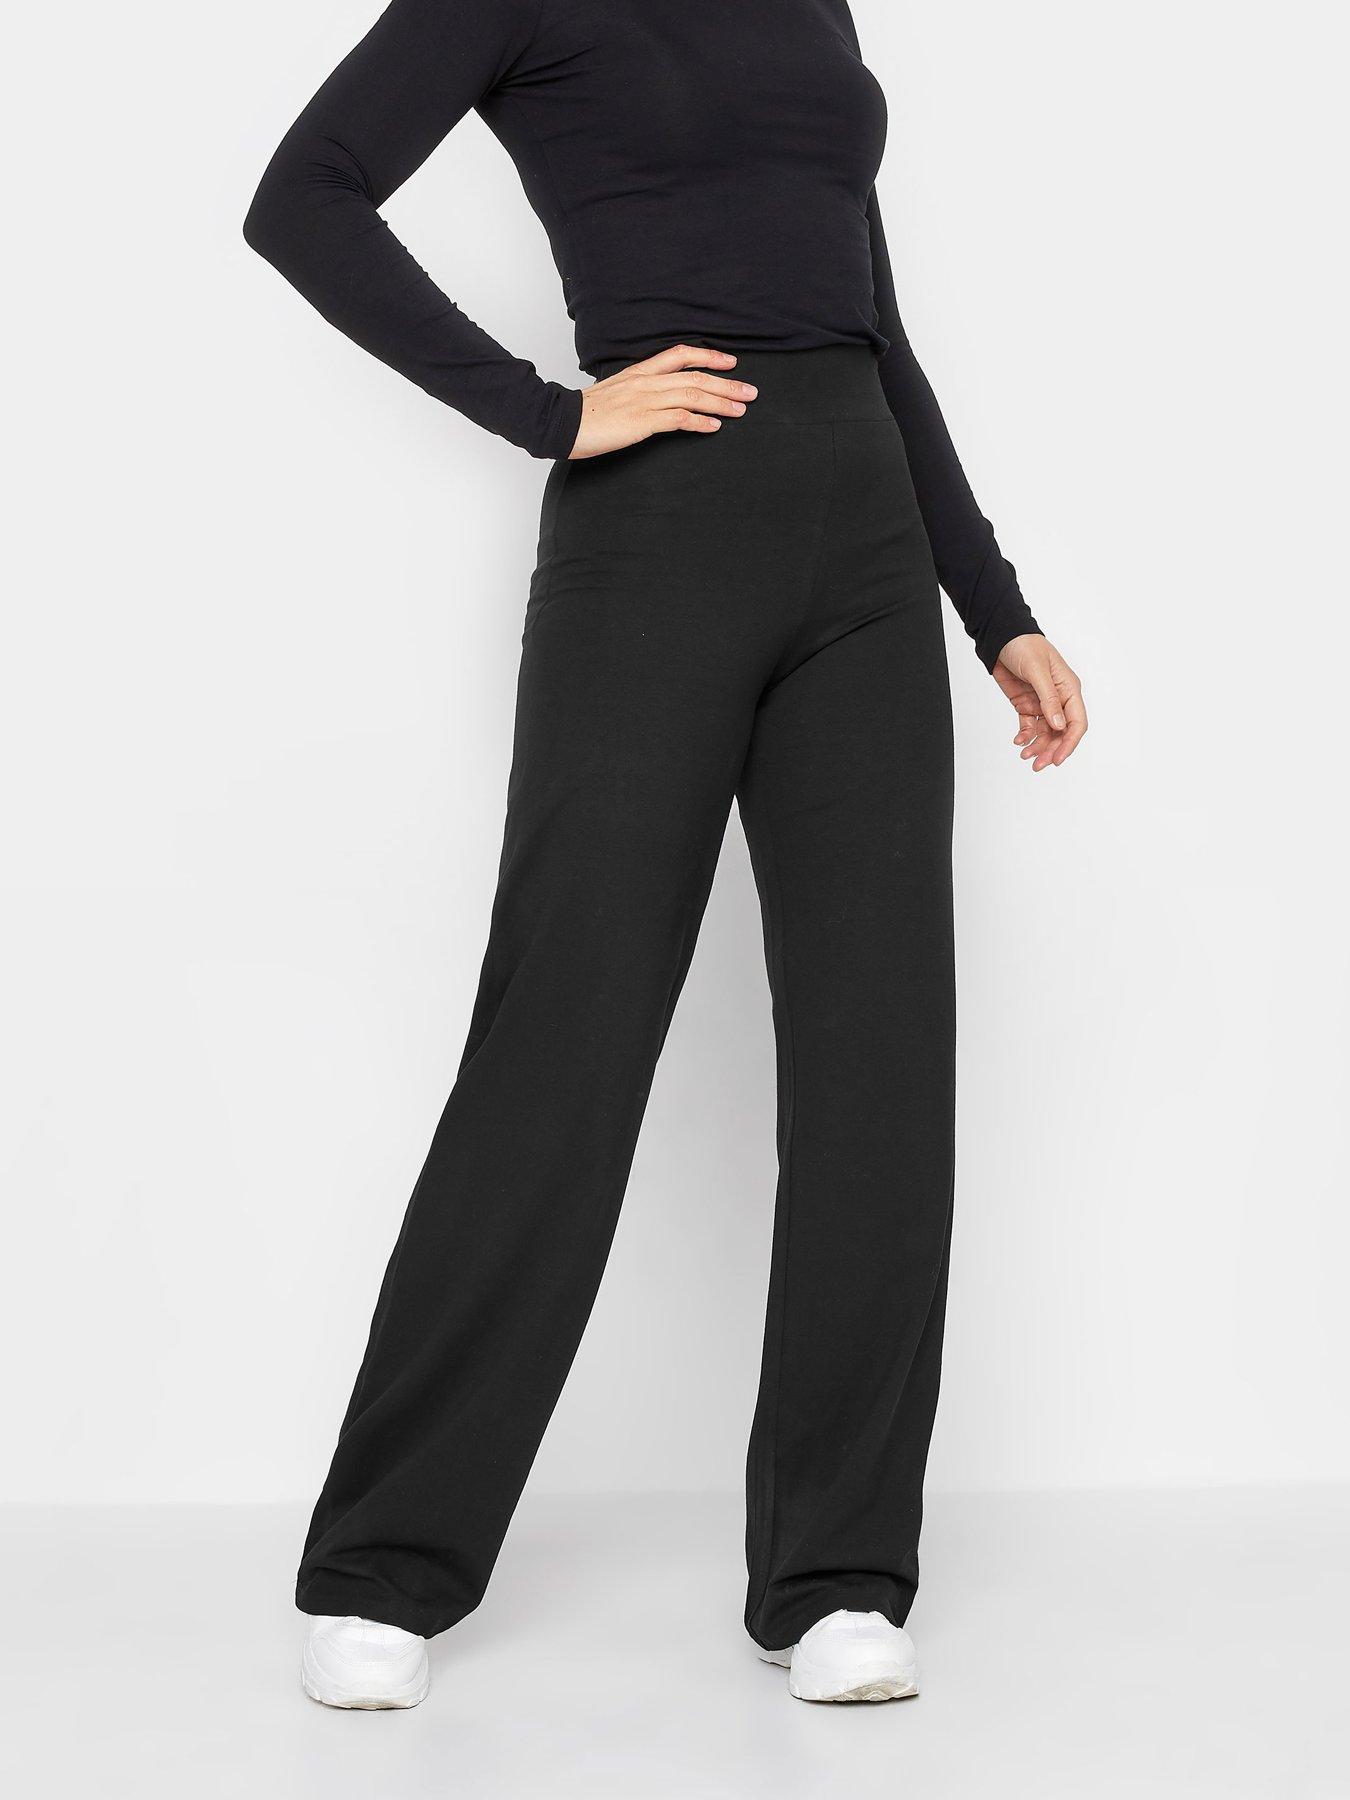 Skechers Women's Gowalk Pant, Bold Black, Medium Petite 